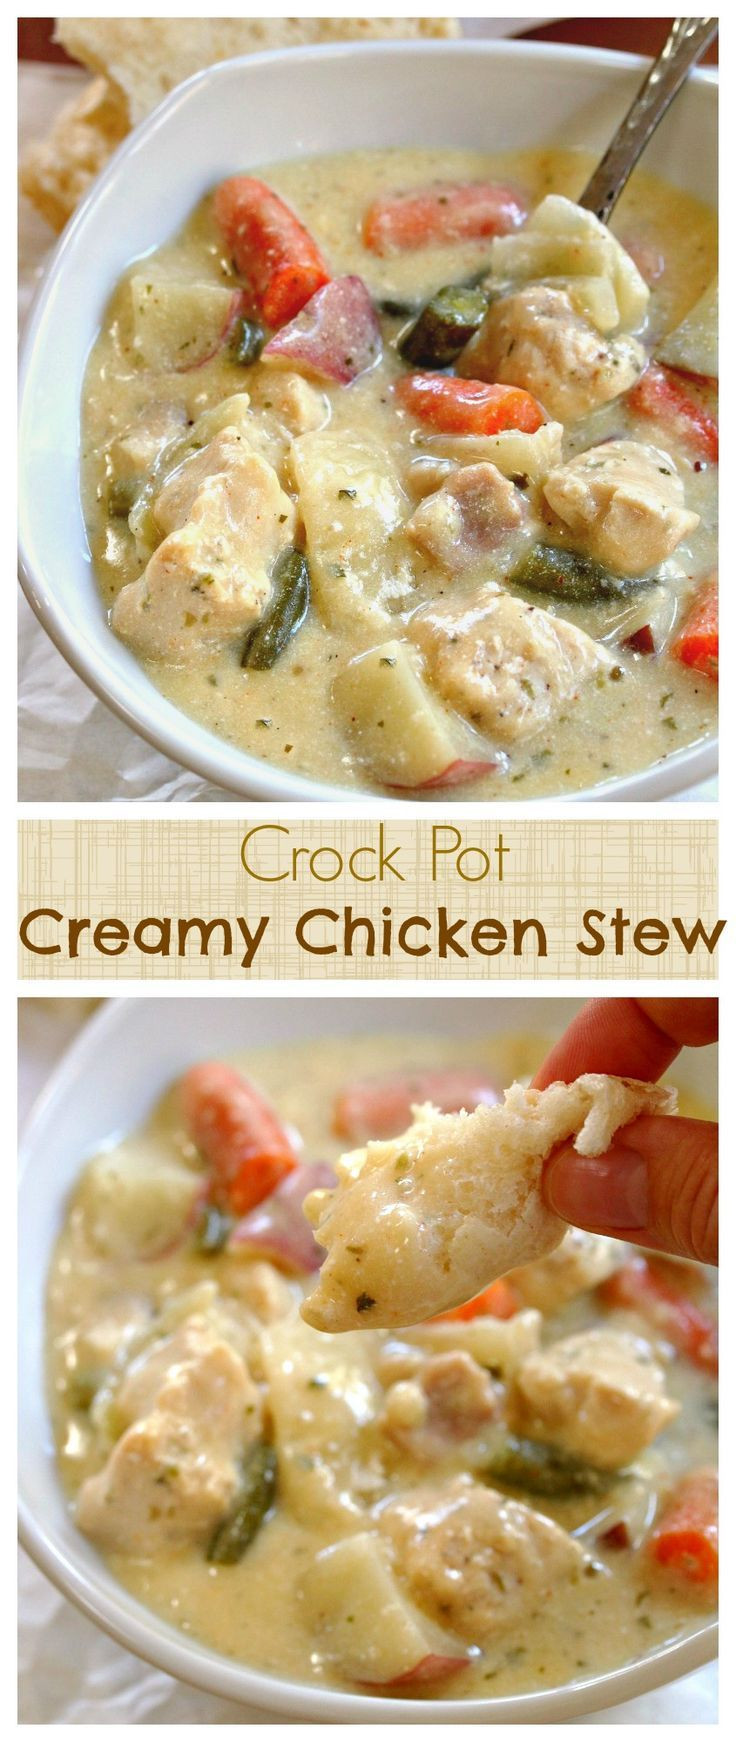 Healthy Chicken Stew Crock Pot
 1000 ideas about Healthy Crock Pot Meals on Pinterest